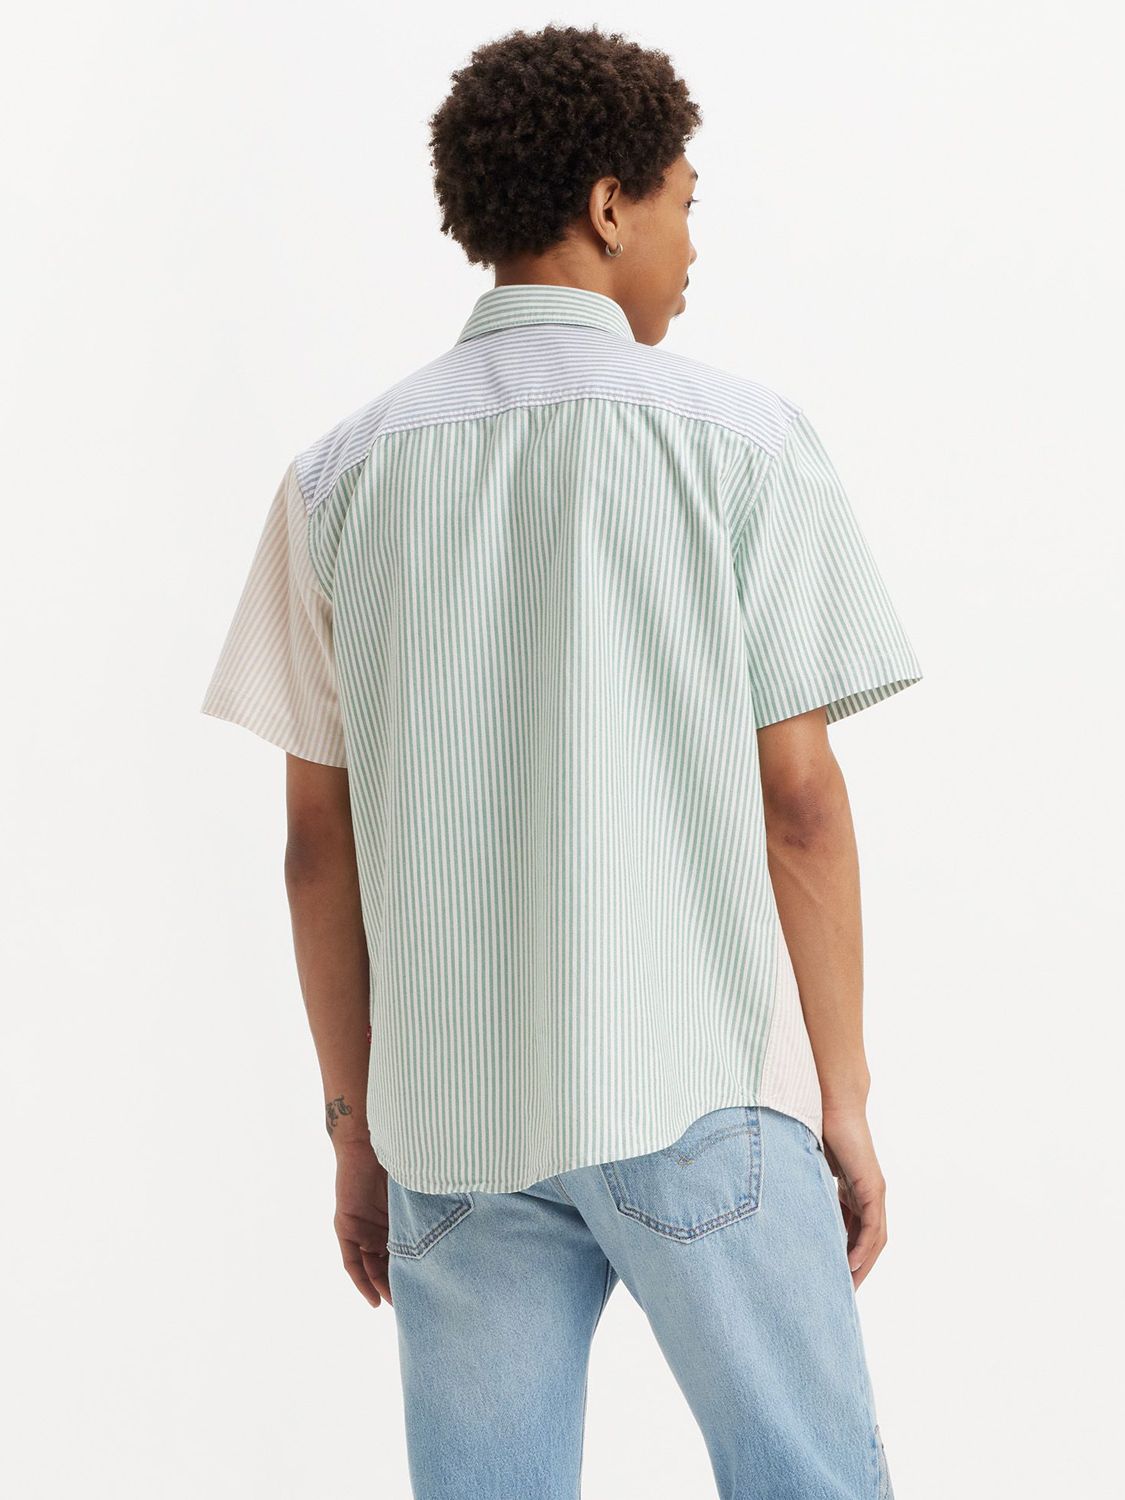 Buy Levi's Authentic Stripe Button Down Short Sleeve Shirt, White/Multi Online at johnlewis.com